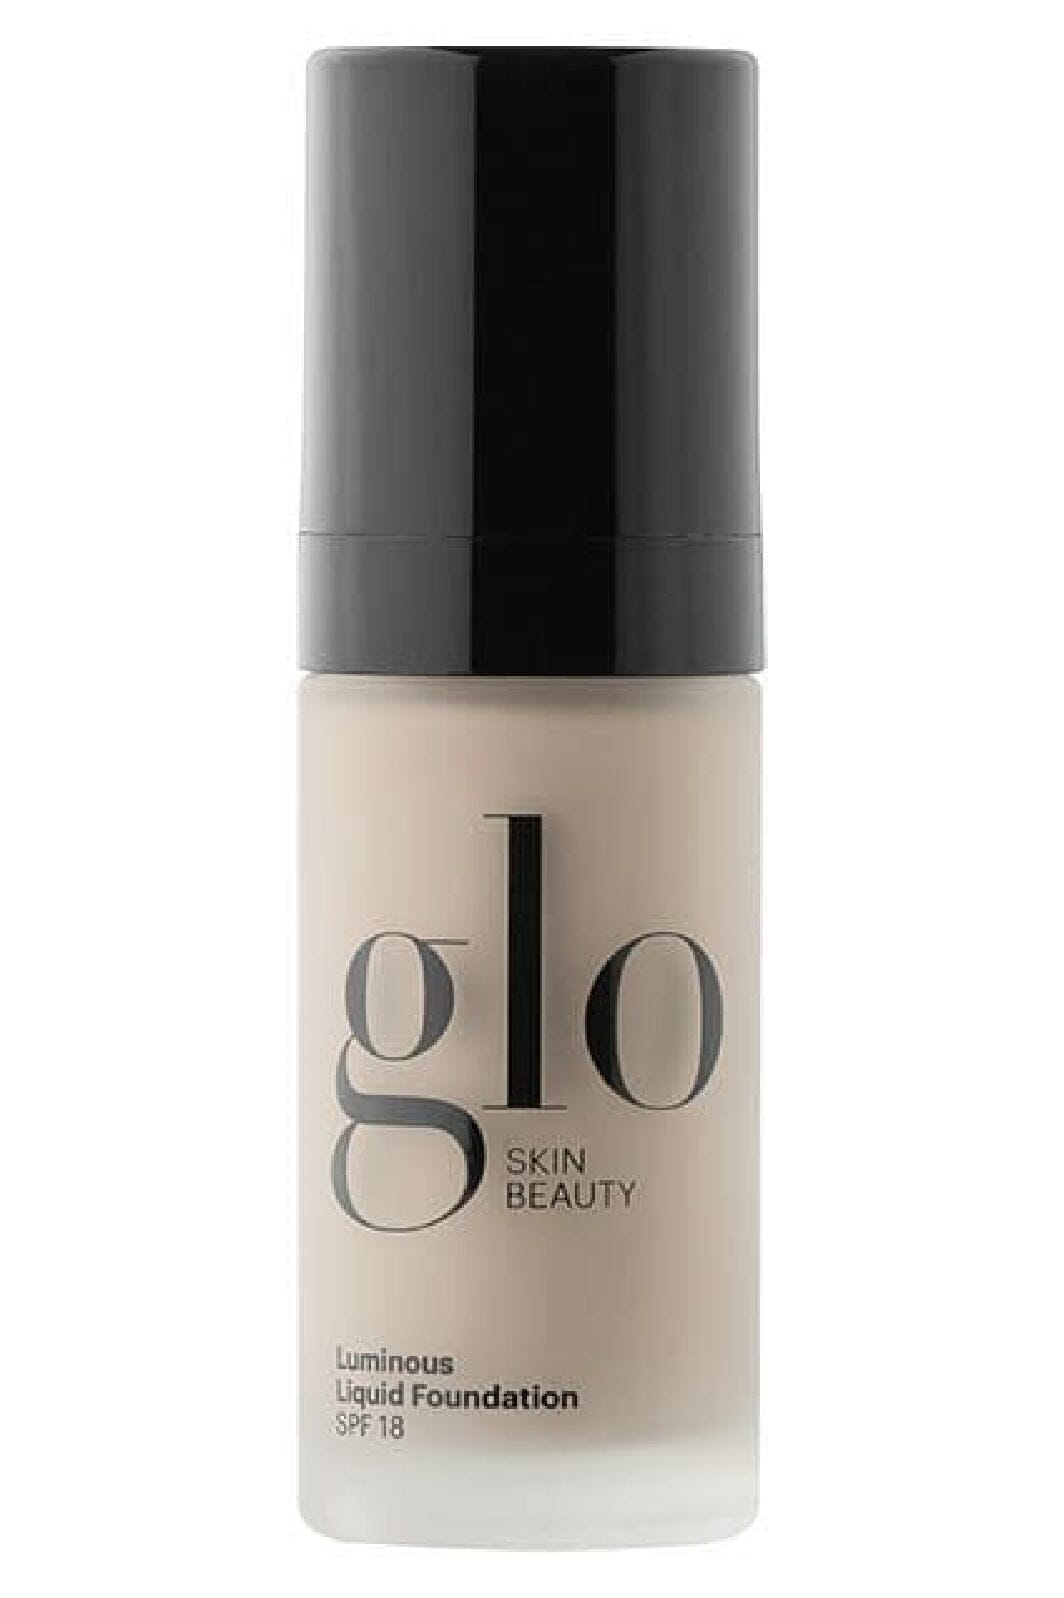 Glo Skin Beauty - Glo Luminous Liquid Foundation SPF 18 - Porcelain, 30 ml Foundation 